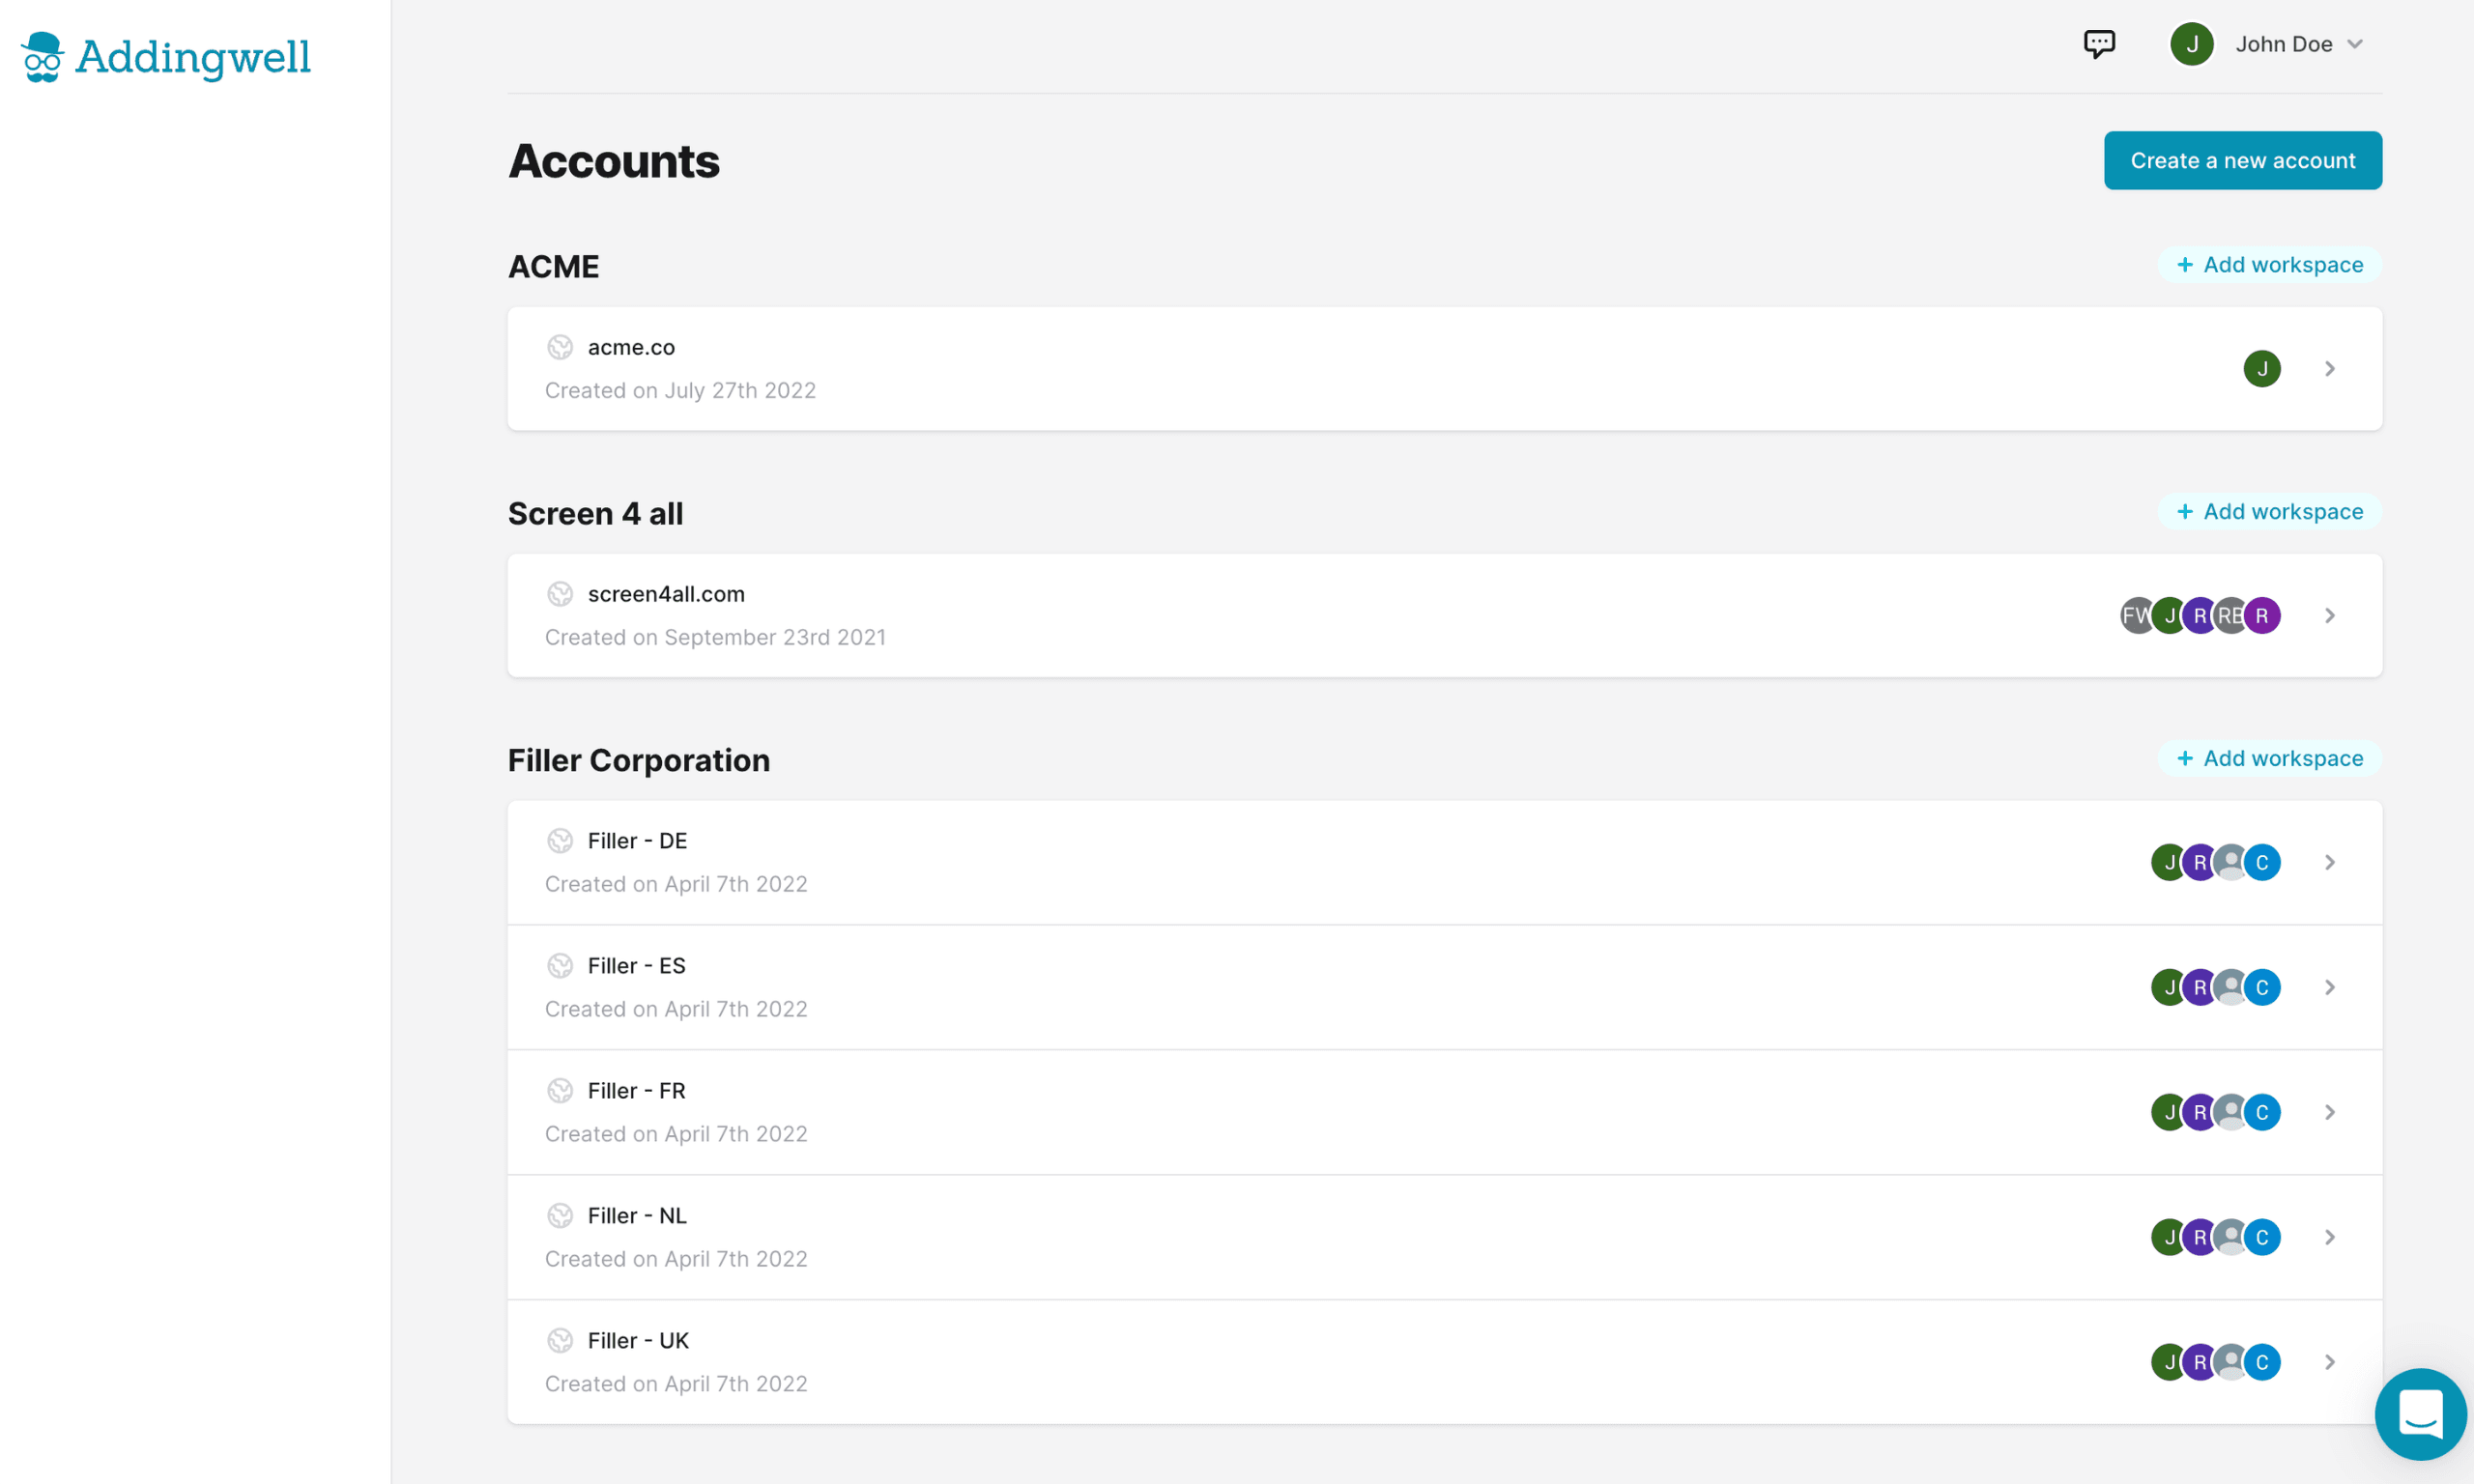 Addingwell manage accounts